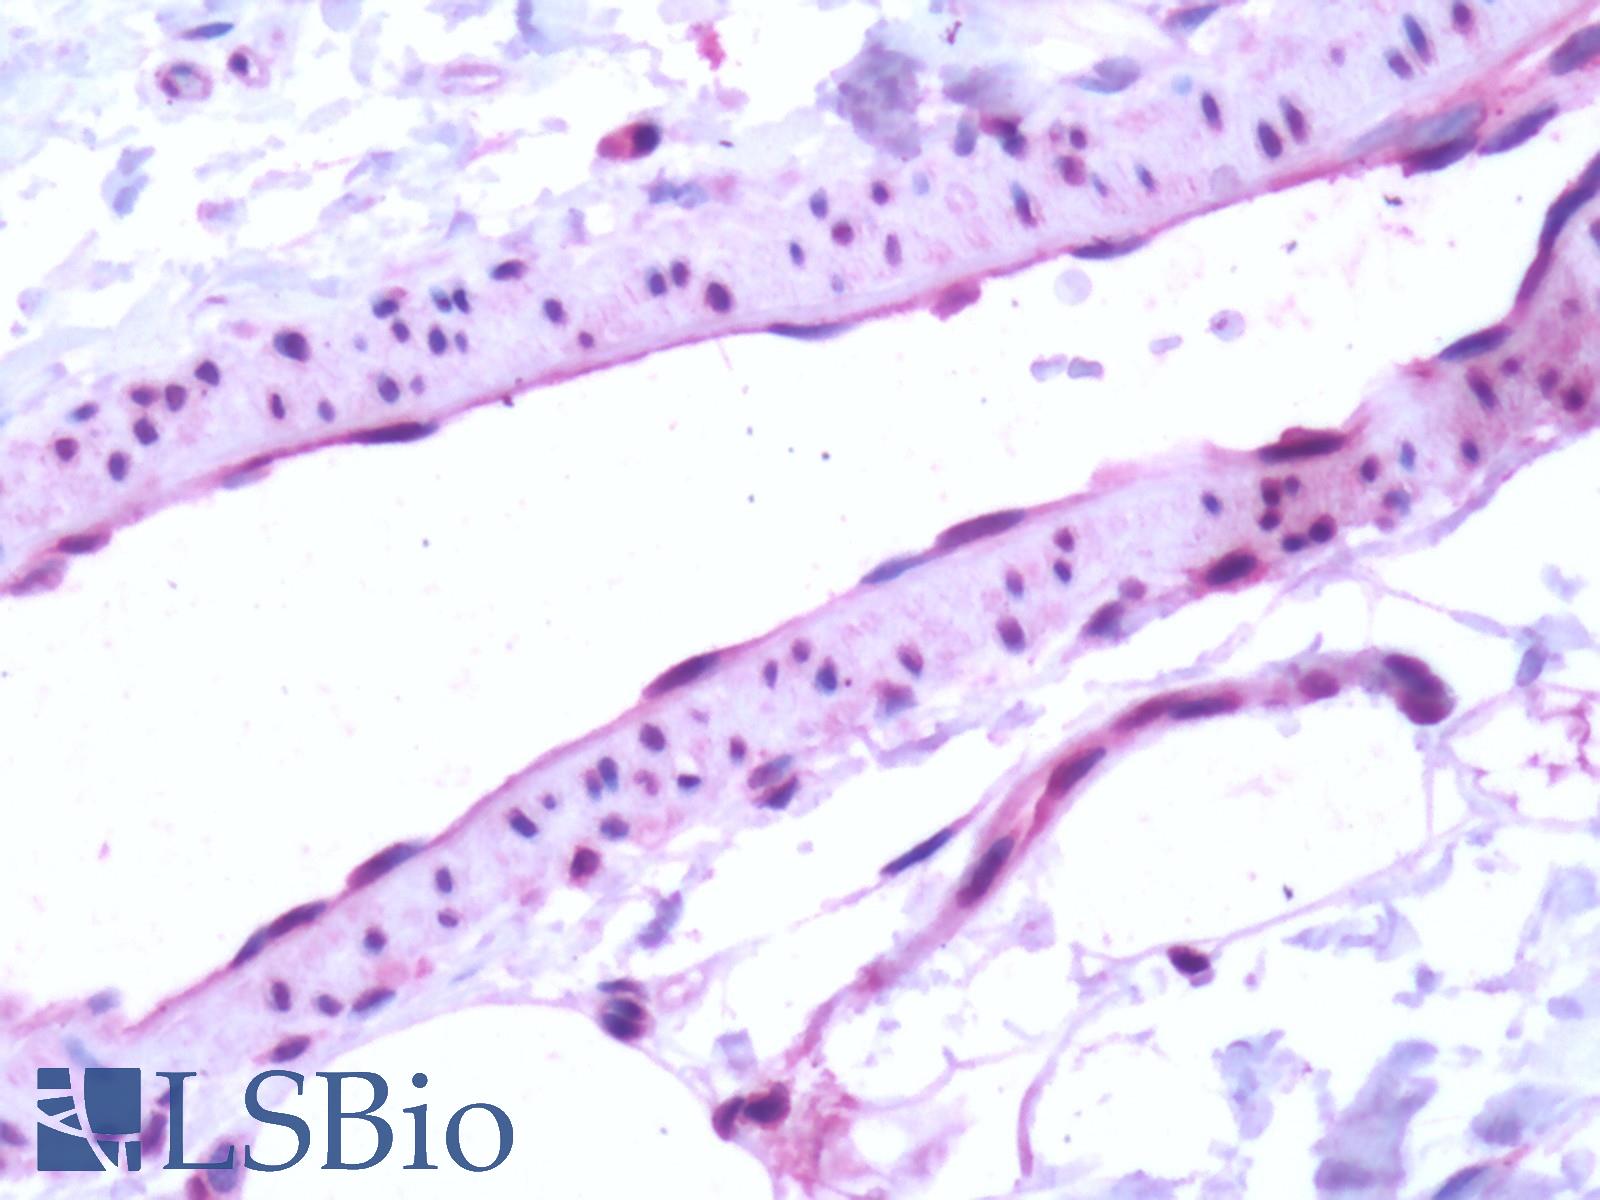 S1PR1 / EDG1 / S1P1 Antibody - Human, Vascular Endothelium: Formalin-Fixed Paraffin-Embedded (FFPE)